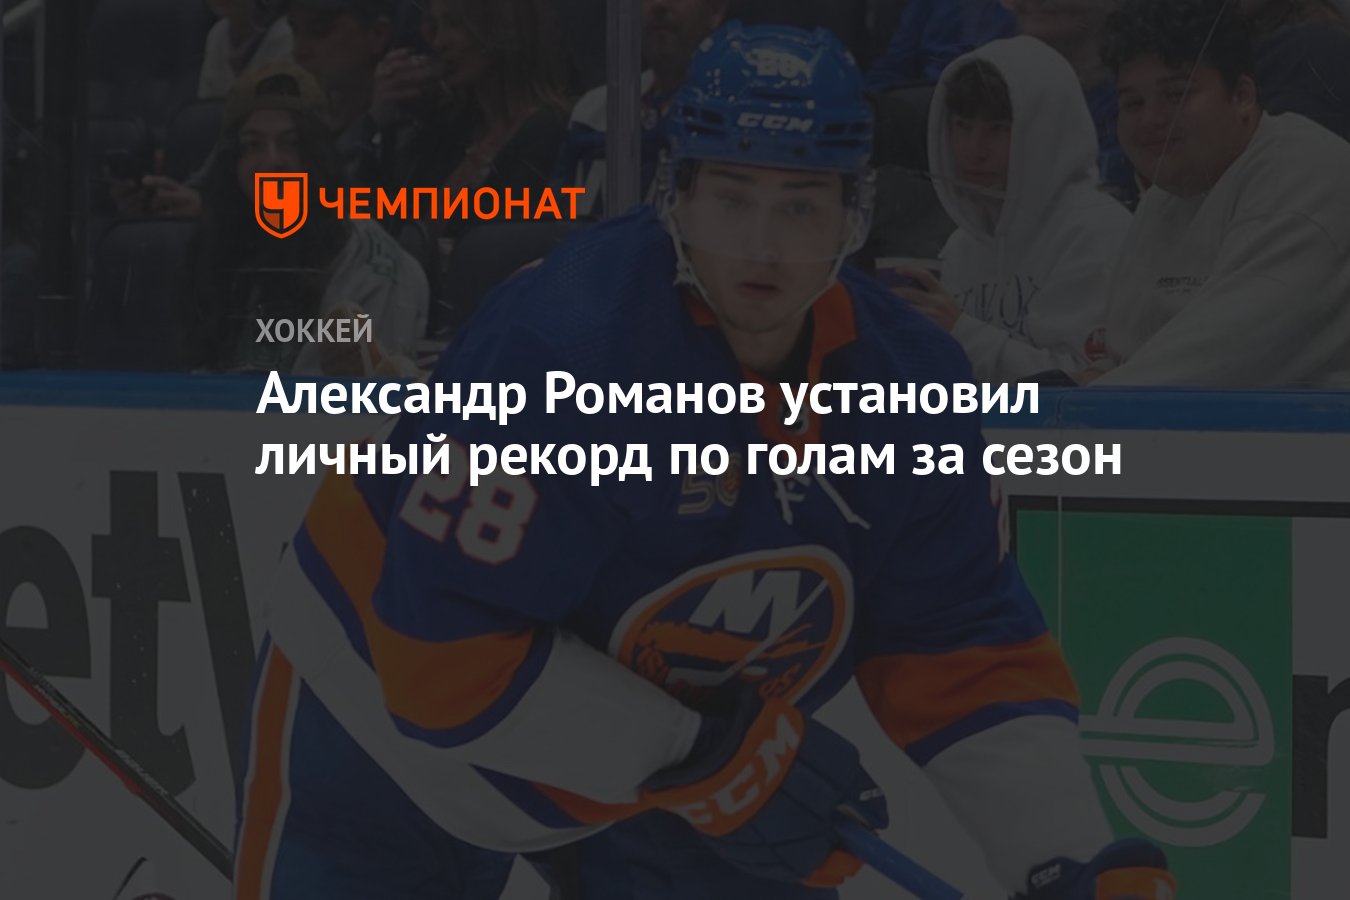 Александр Романов установил личный рекорд по голам за сезон - Чемпионат